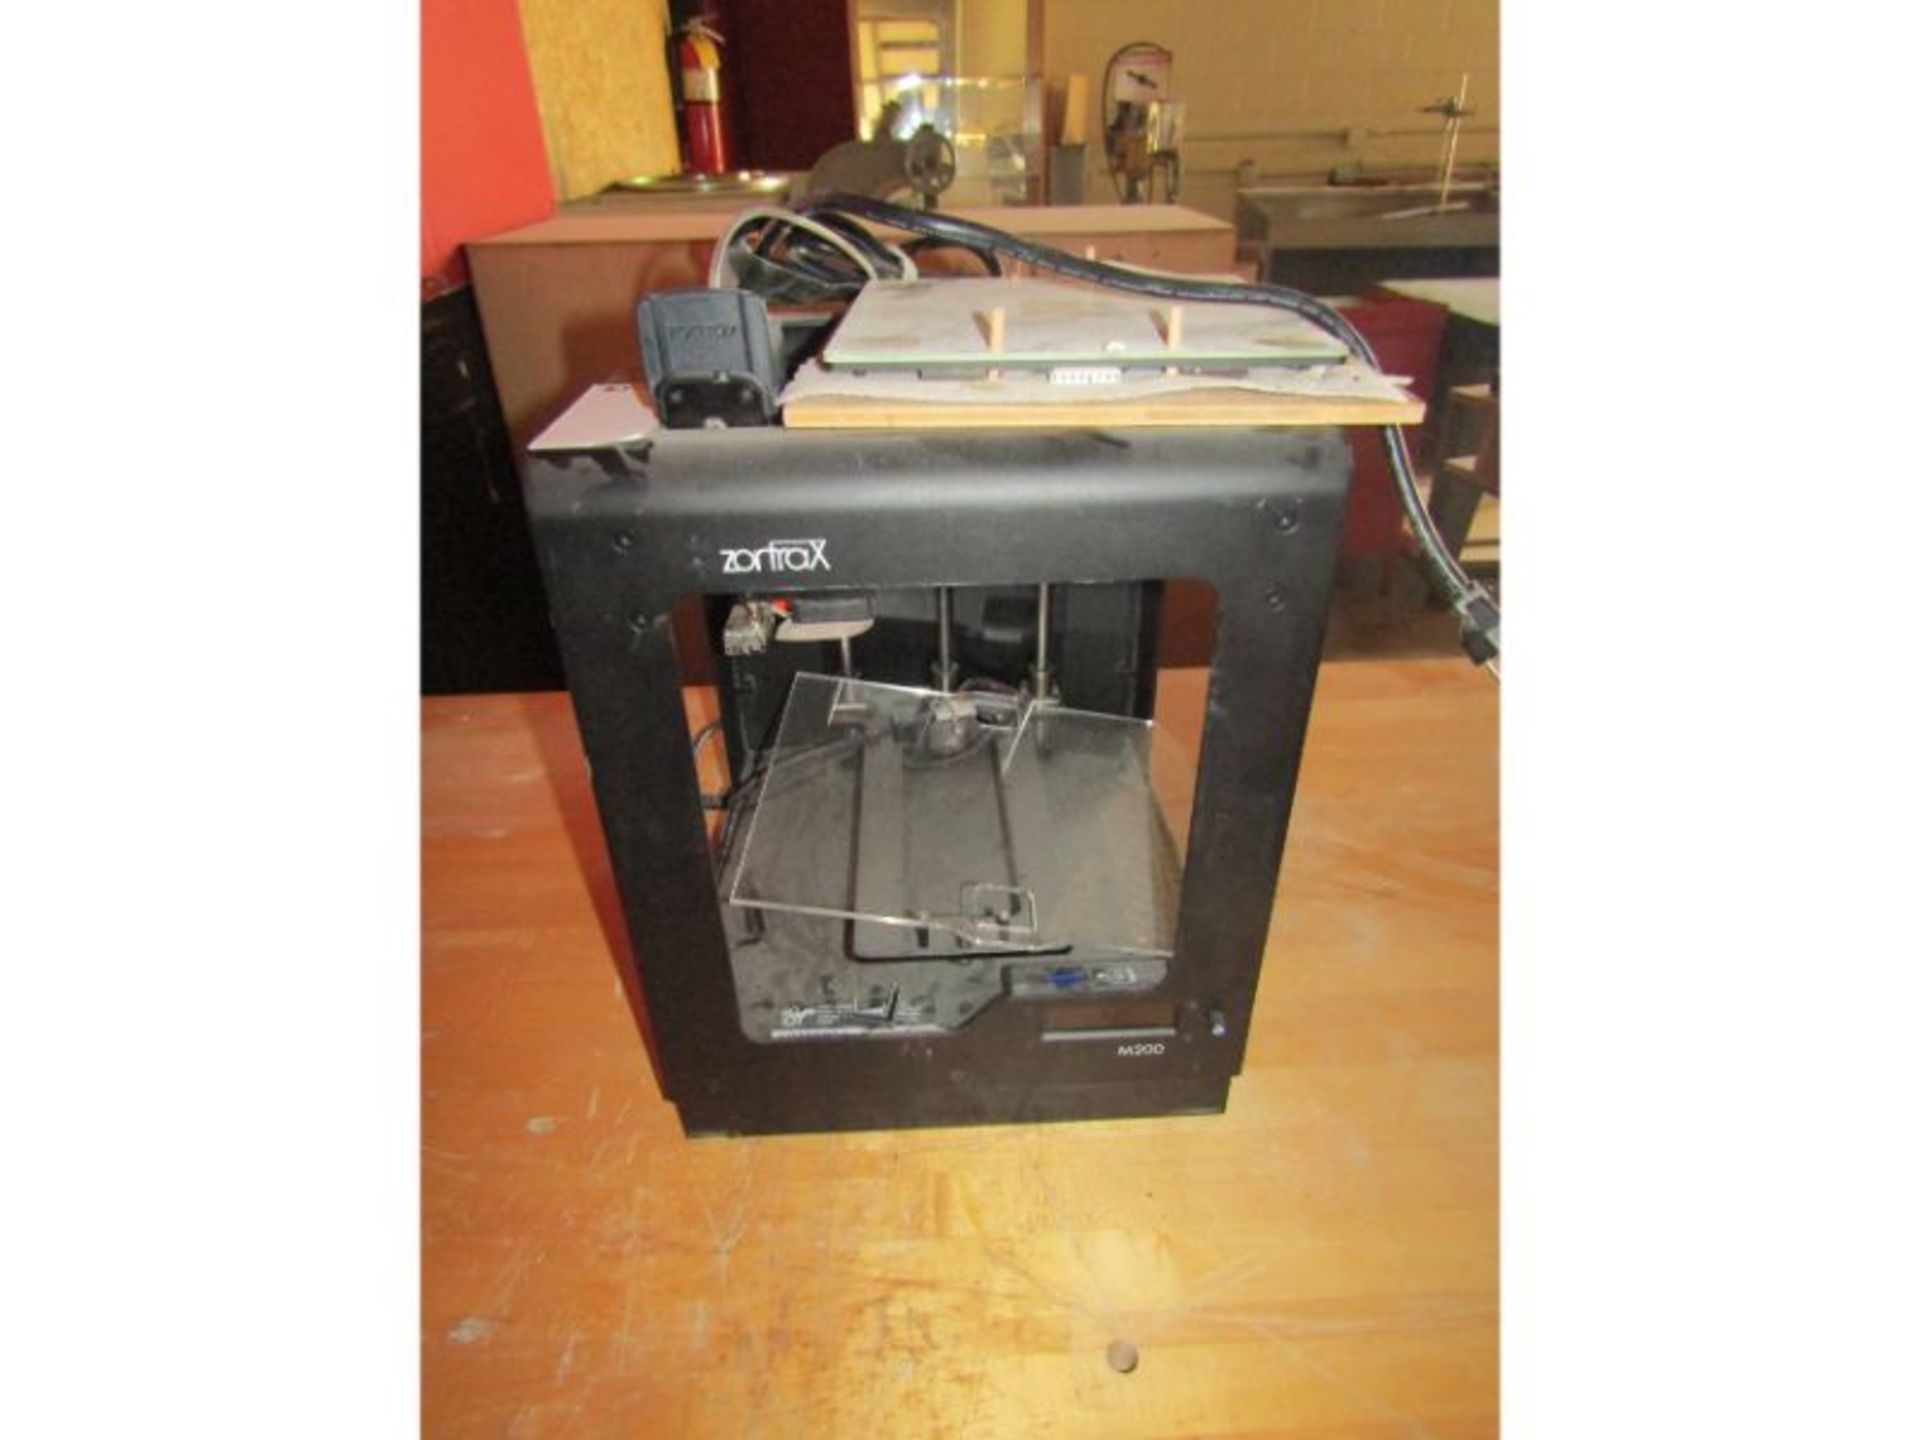 Zortax FDM 3D Printer M200 - Image 3 of 8